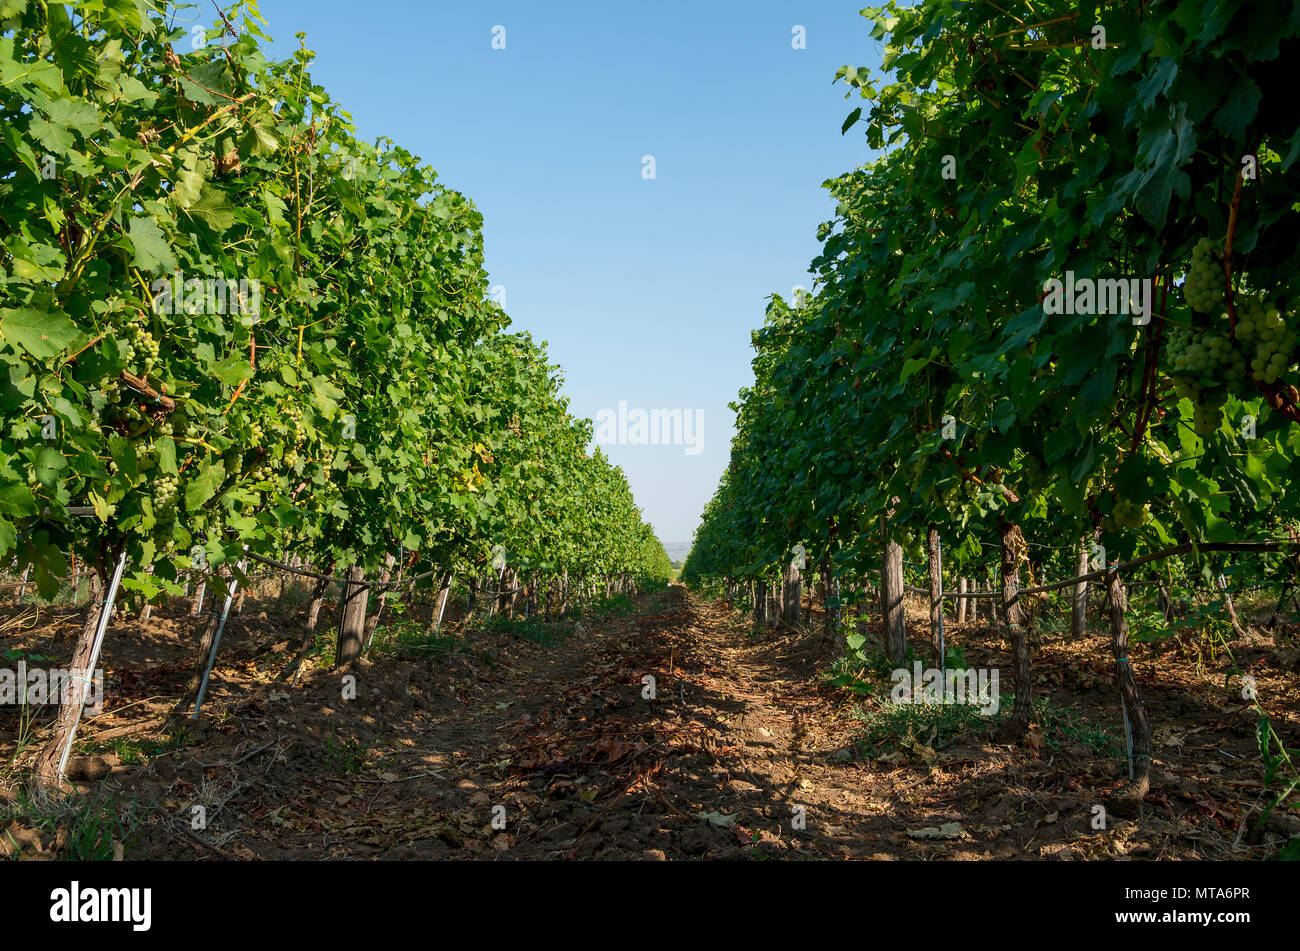 A vineyard plantation of grape bearing vines. Stock Photo